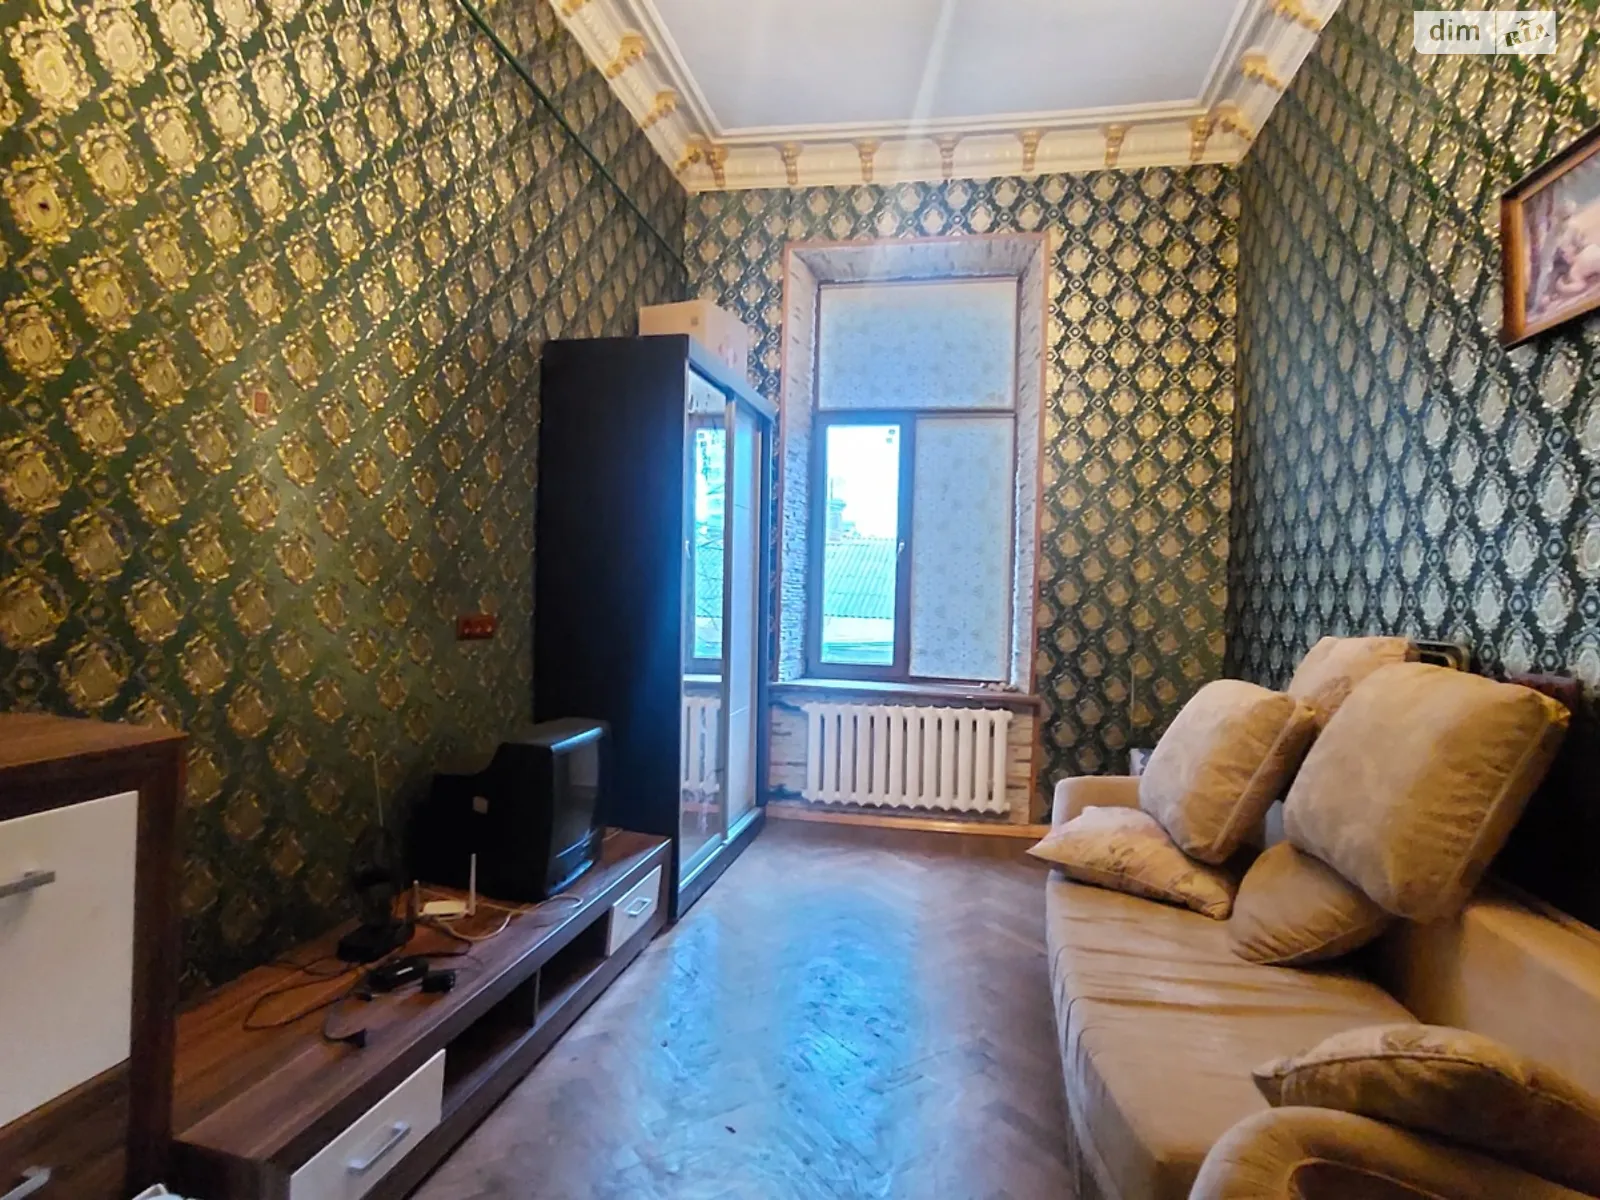 Продается комната 26 кв. м в Одессе, цена: 20000 $ - фото 1